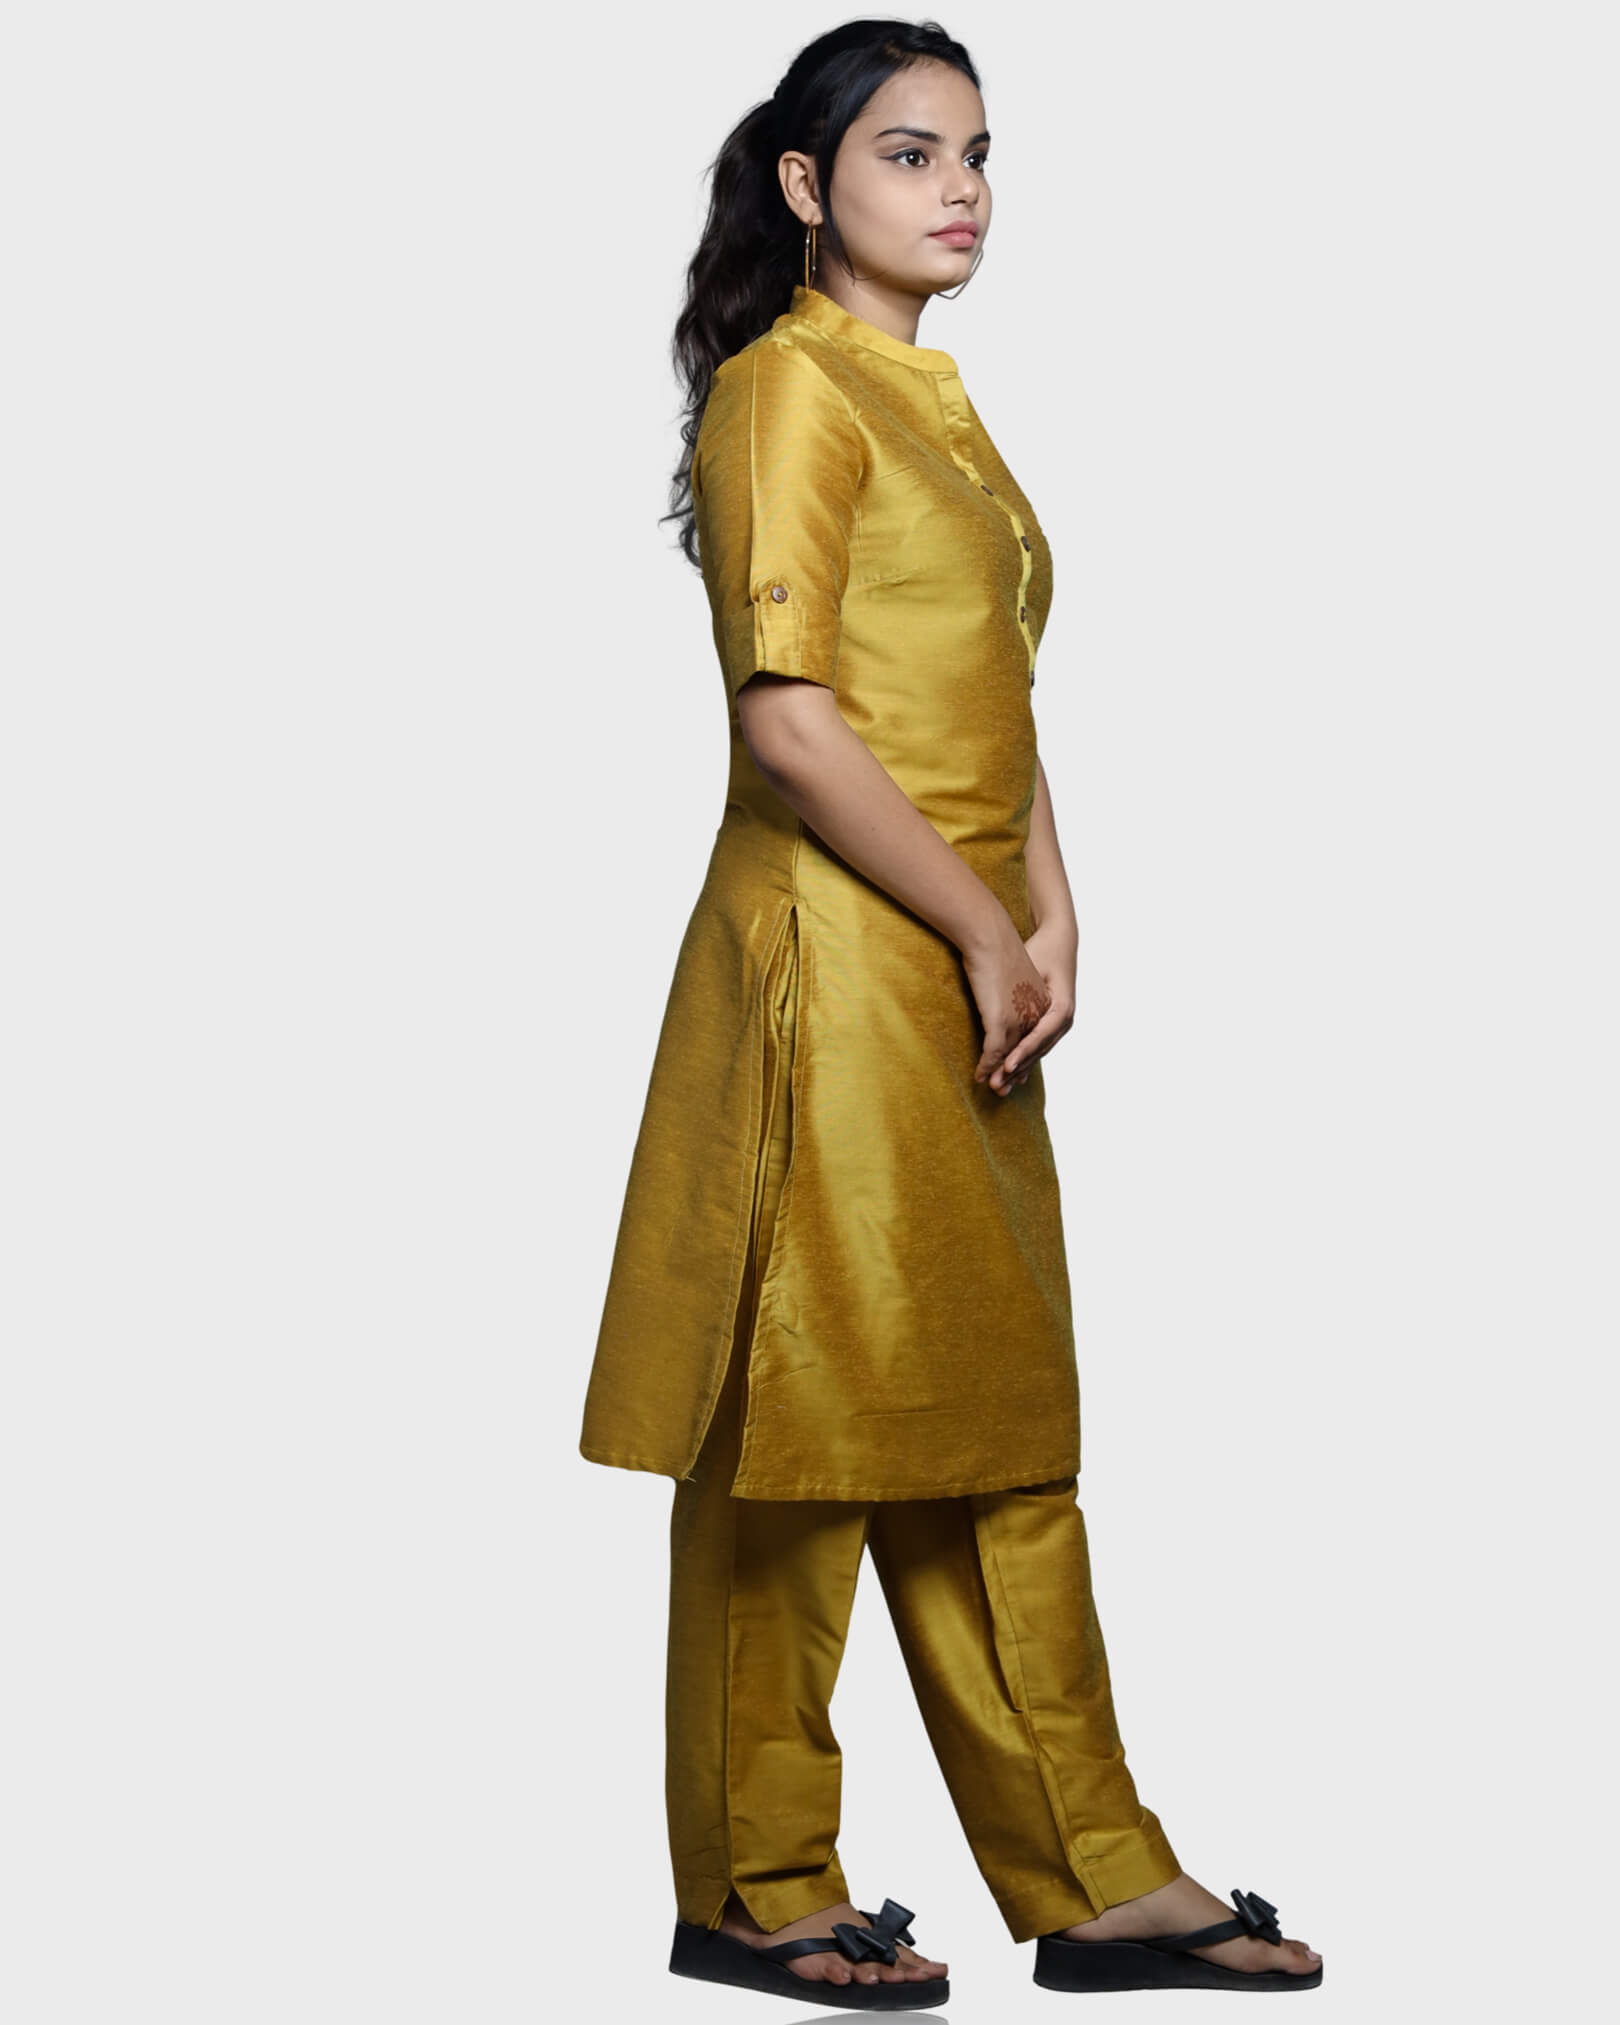 Silkfab Women's Banarasi Silk Mustard Solid Kurti Pant Set - SILKFAB